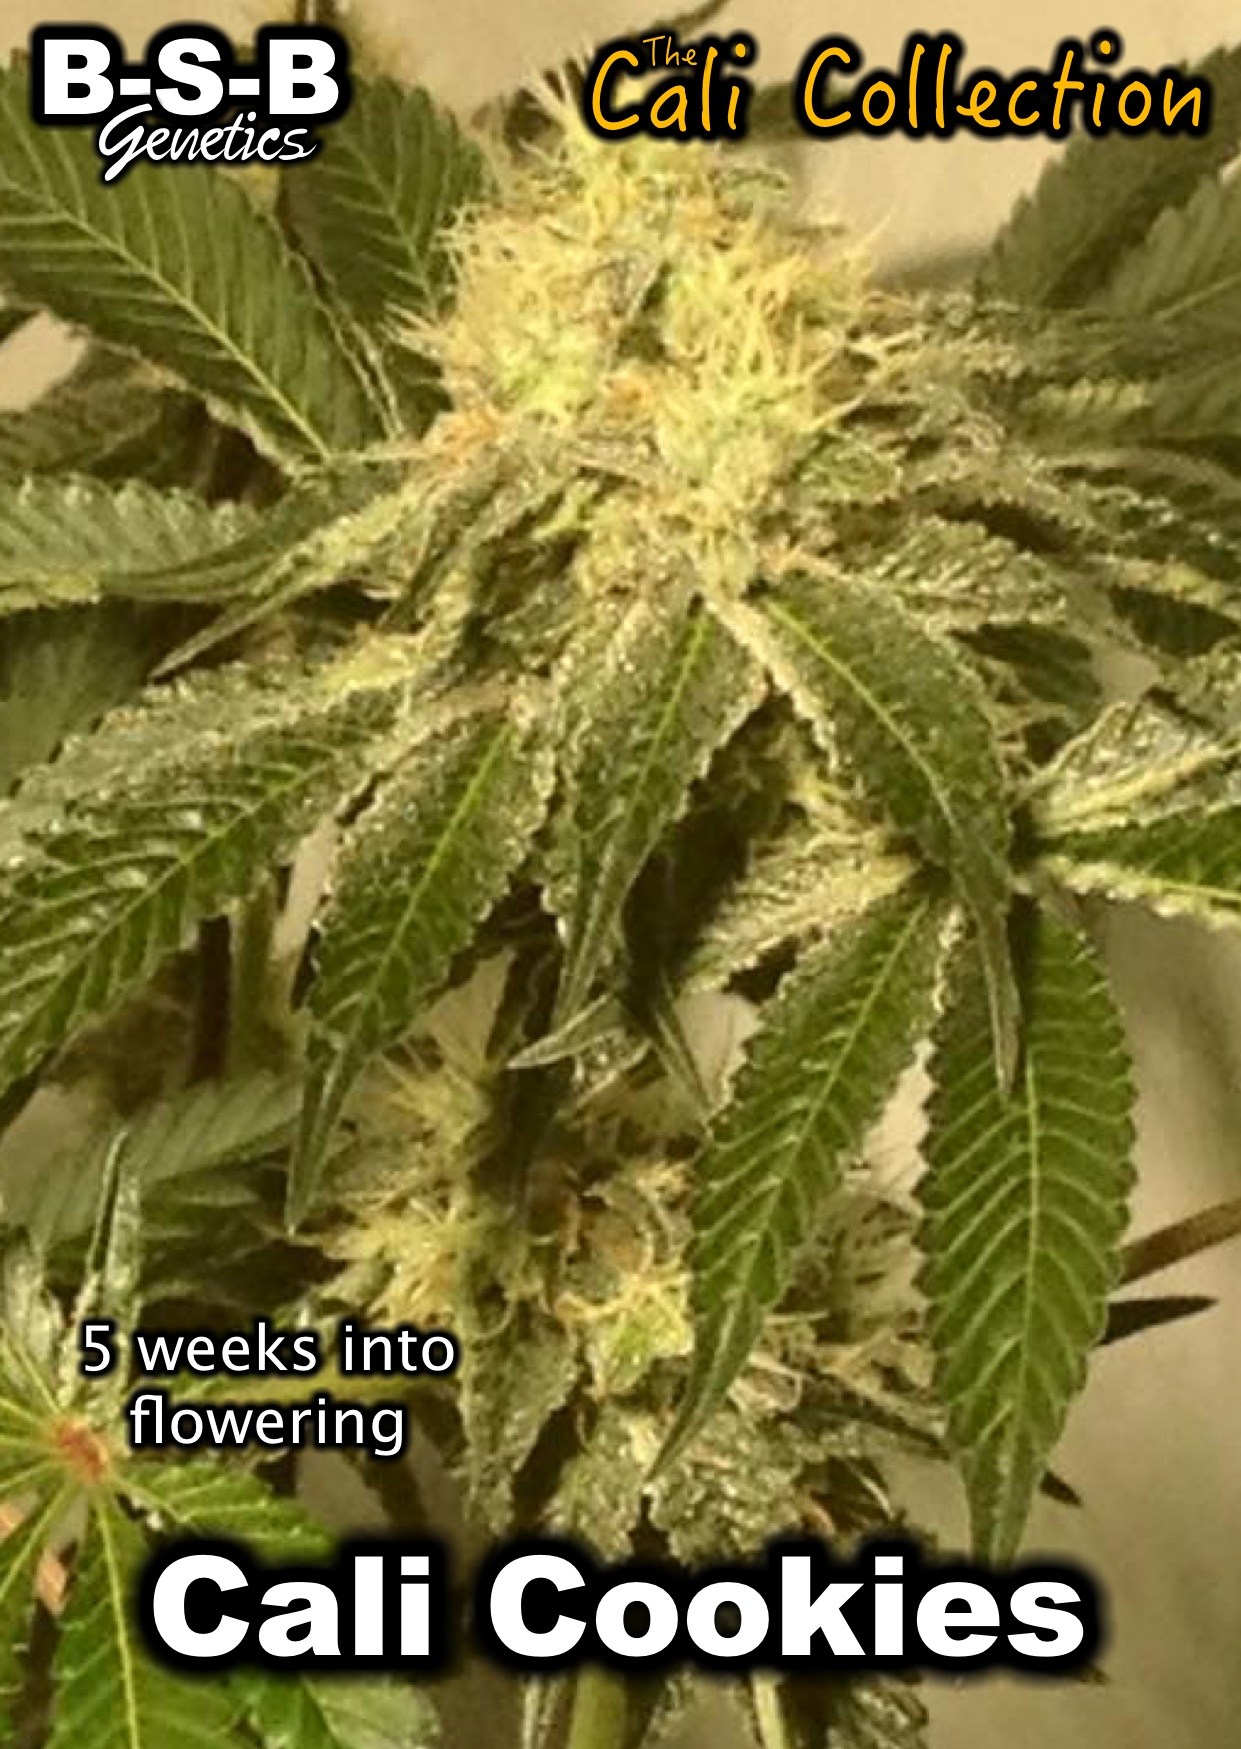 SALE - Cali Cookies - BSB Genetics - Cannabis Seed Sale Items